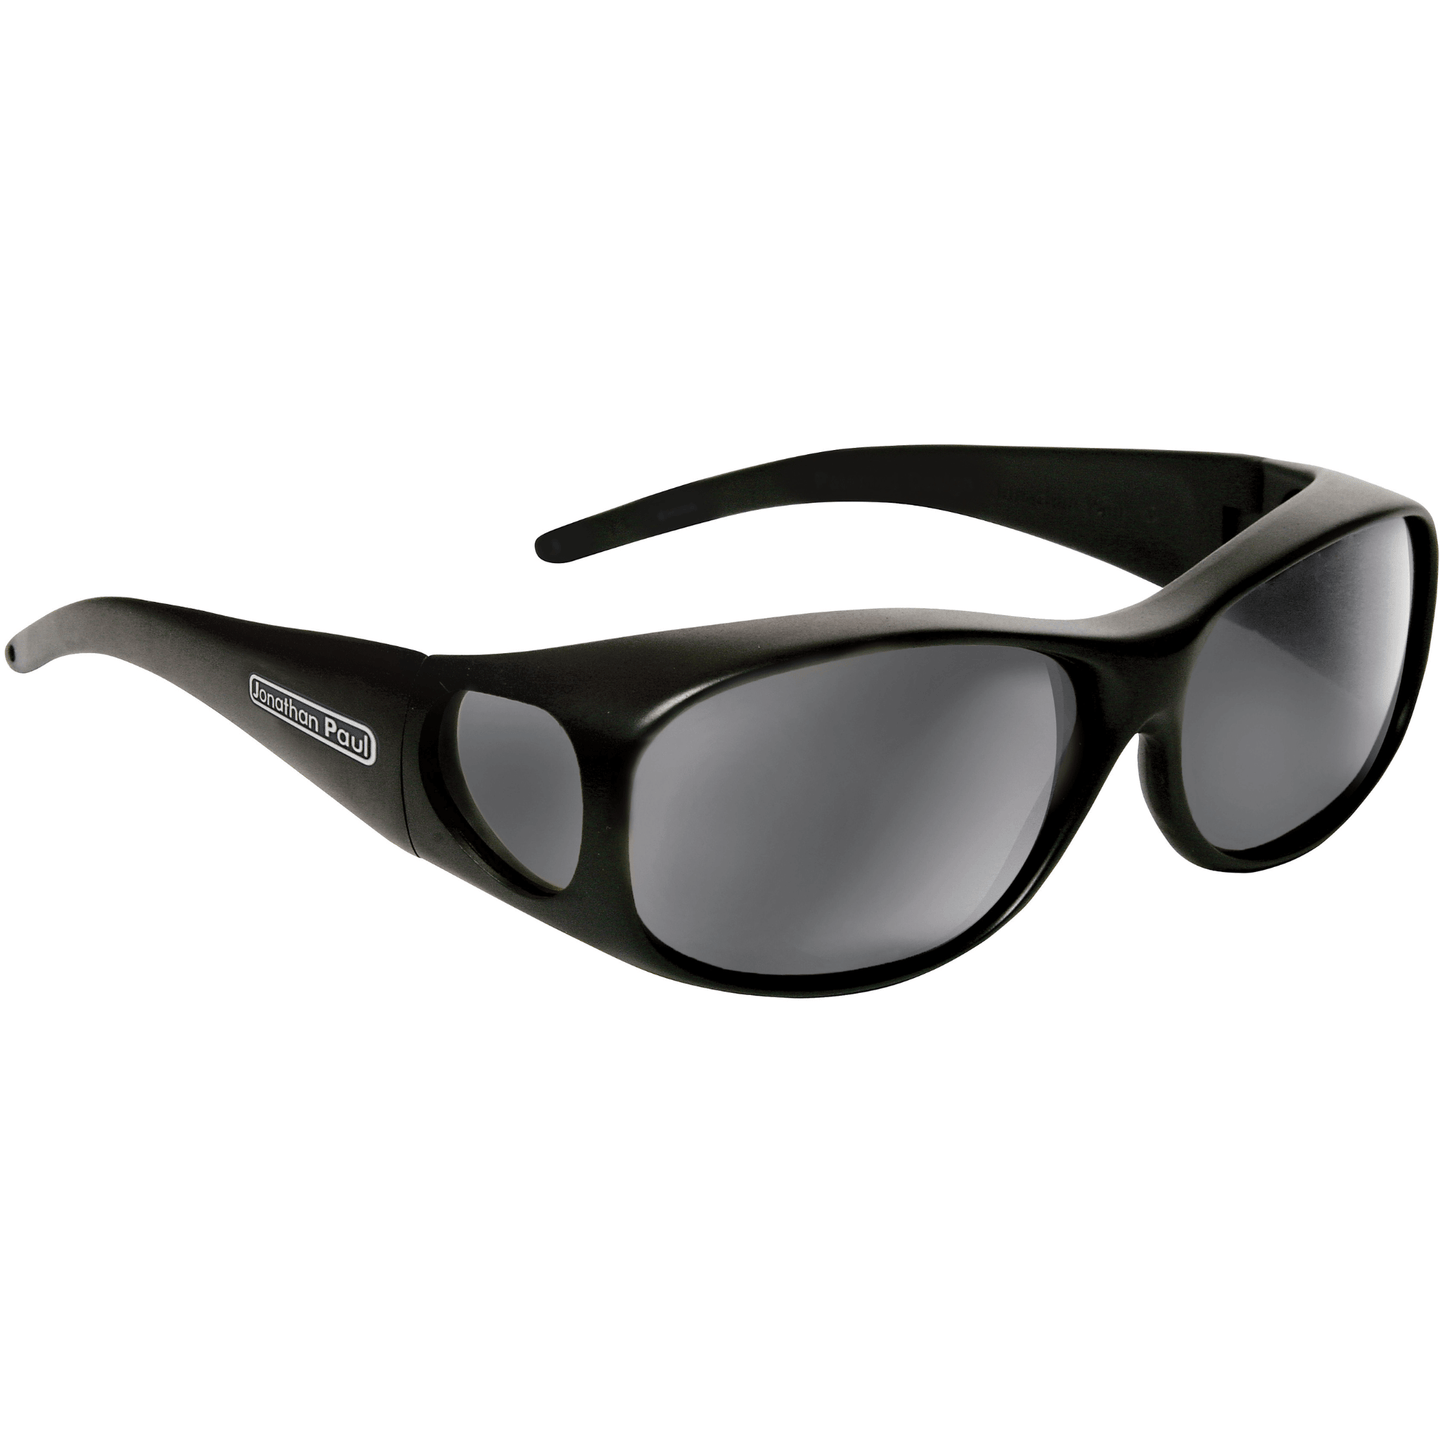 Fitover Sunglasses 'Element' Matte Black - Grey Lens